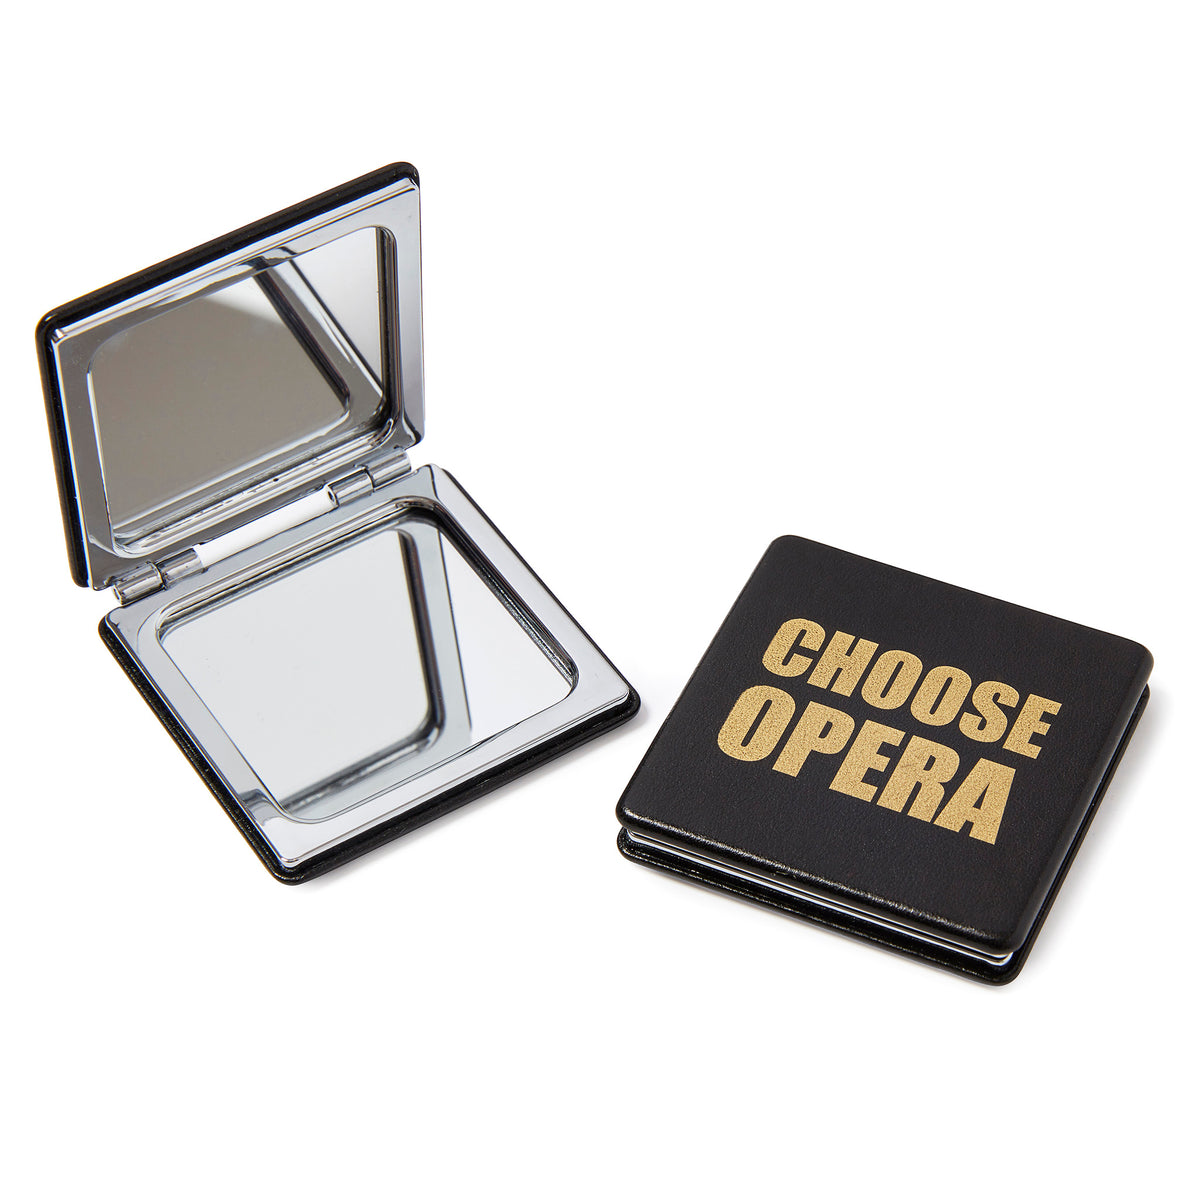 ENO Choose Opera Compact Mirror